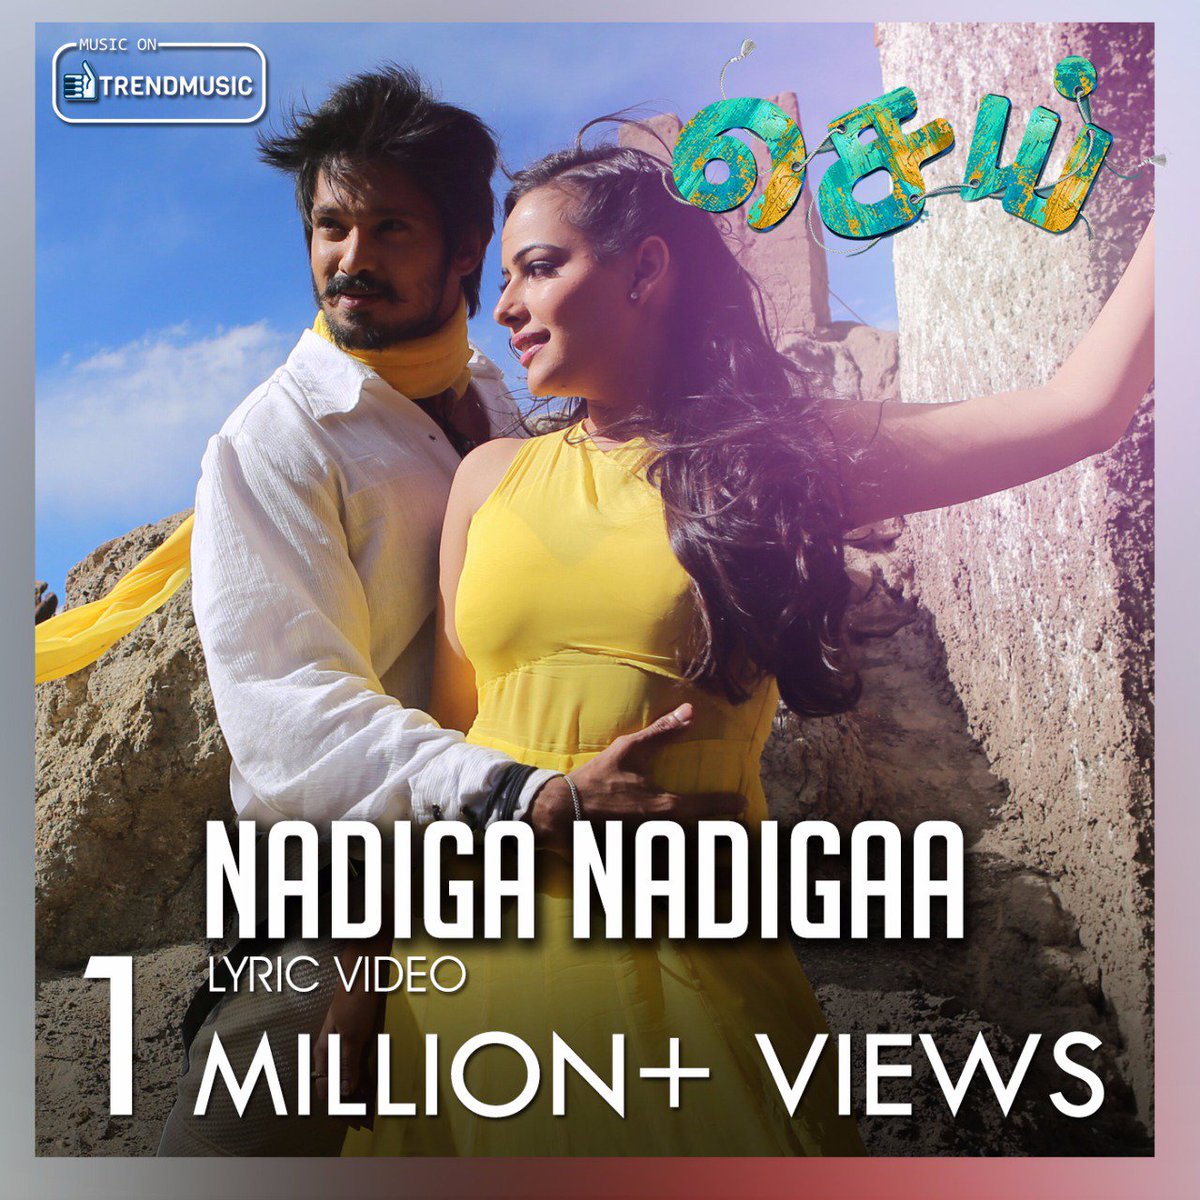 1 million views for #NadigaNadigaa lyrics video. @NyxLopez @shreyaghoshal #sonunigam for this MAGIC @Nakkhul_Jaidev @AanchalOfficial @YugabhaarathiY @seithefilm @chandrikaravi_ @TrippyTurtle10 @MannuDxb #Sei #SeiFilm